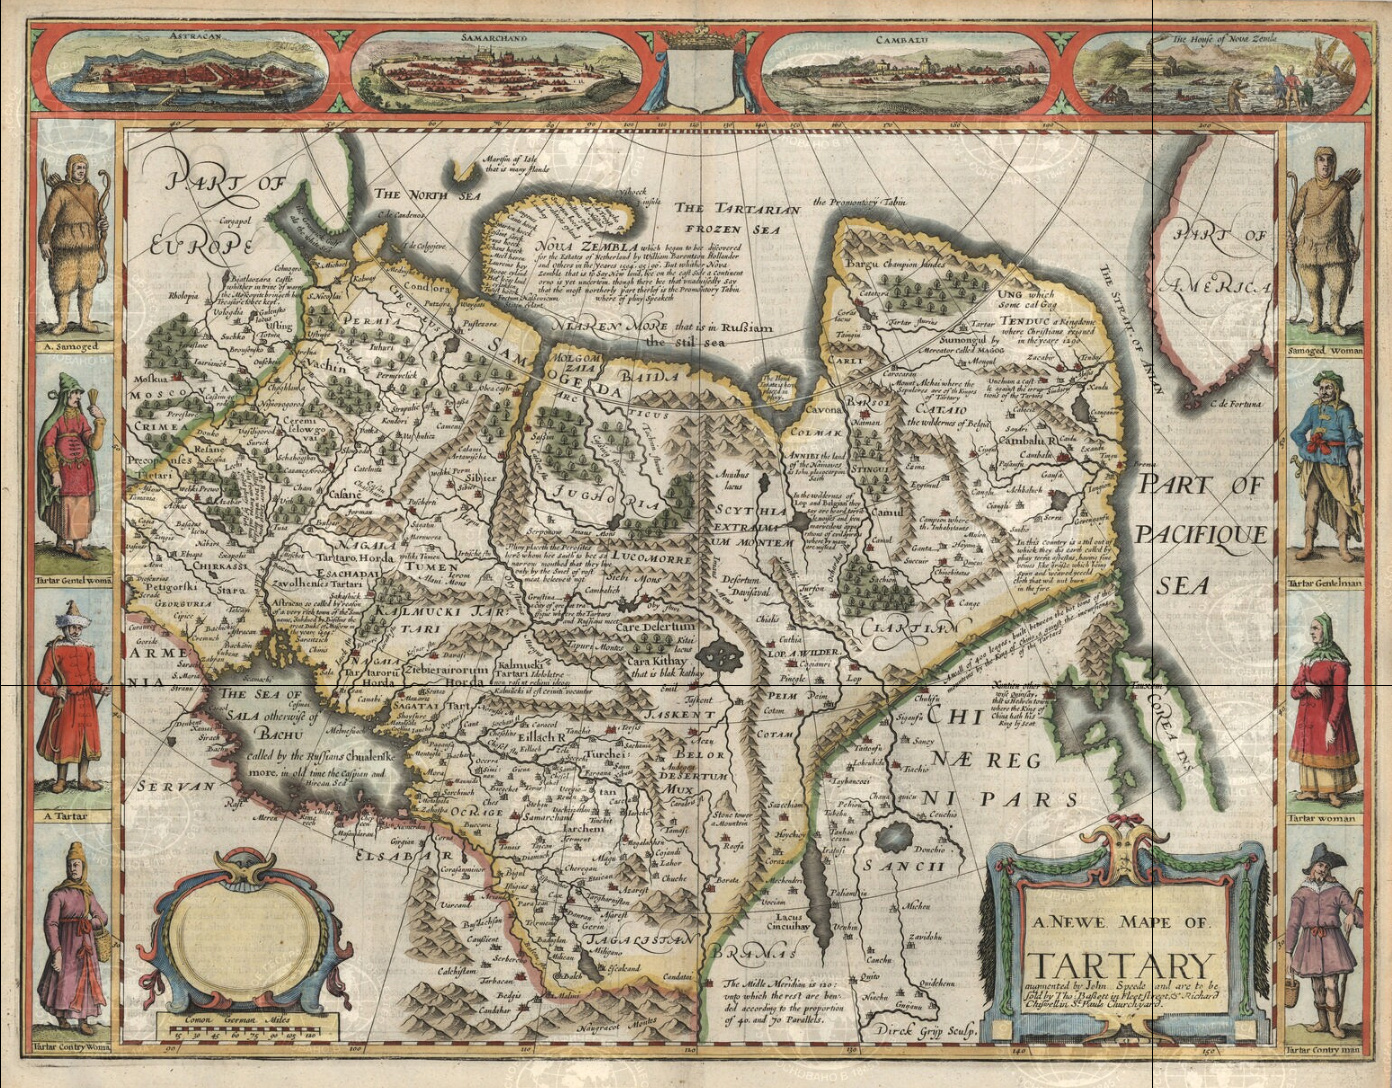 A Newe Mape of Tartary, 1640. Геопортал РГО, https://geoportal.rgo.ru/record/1195